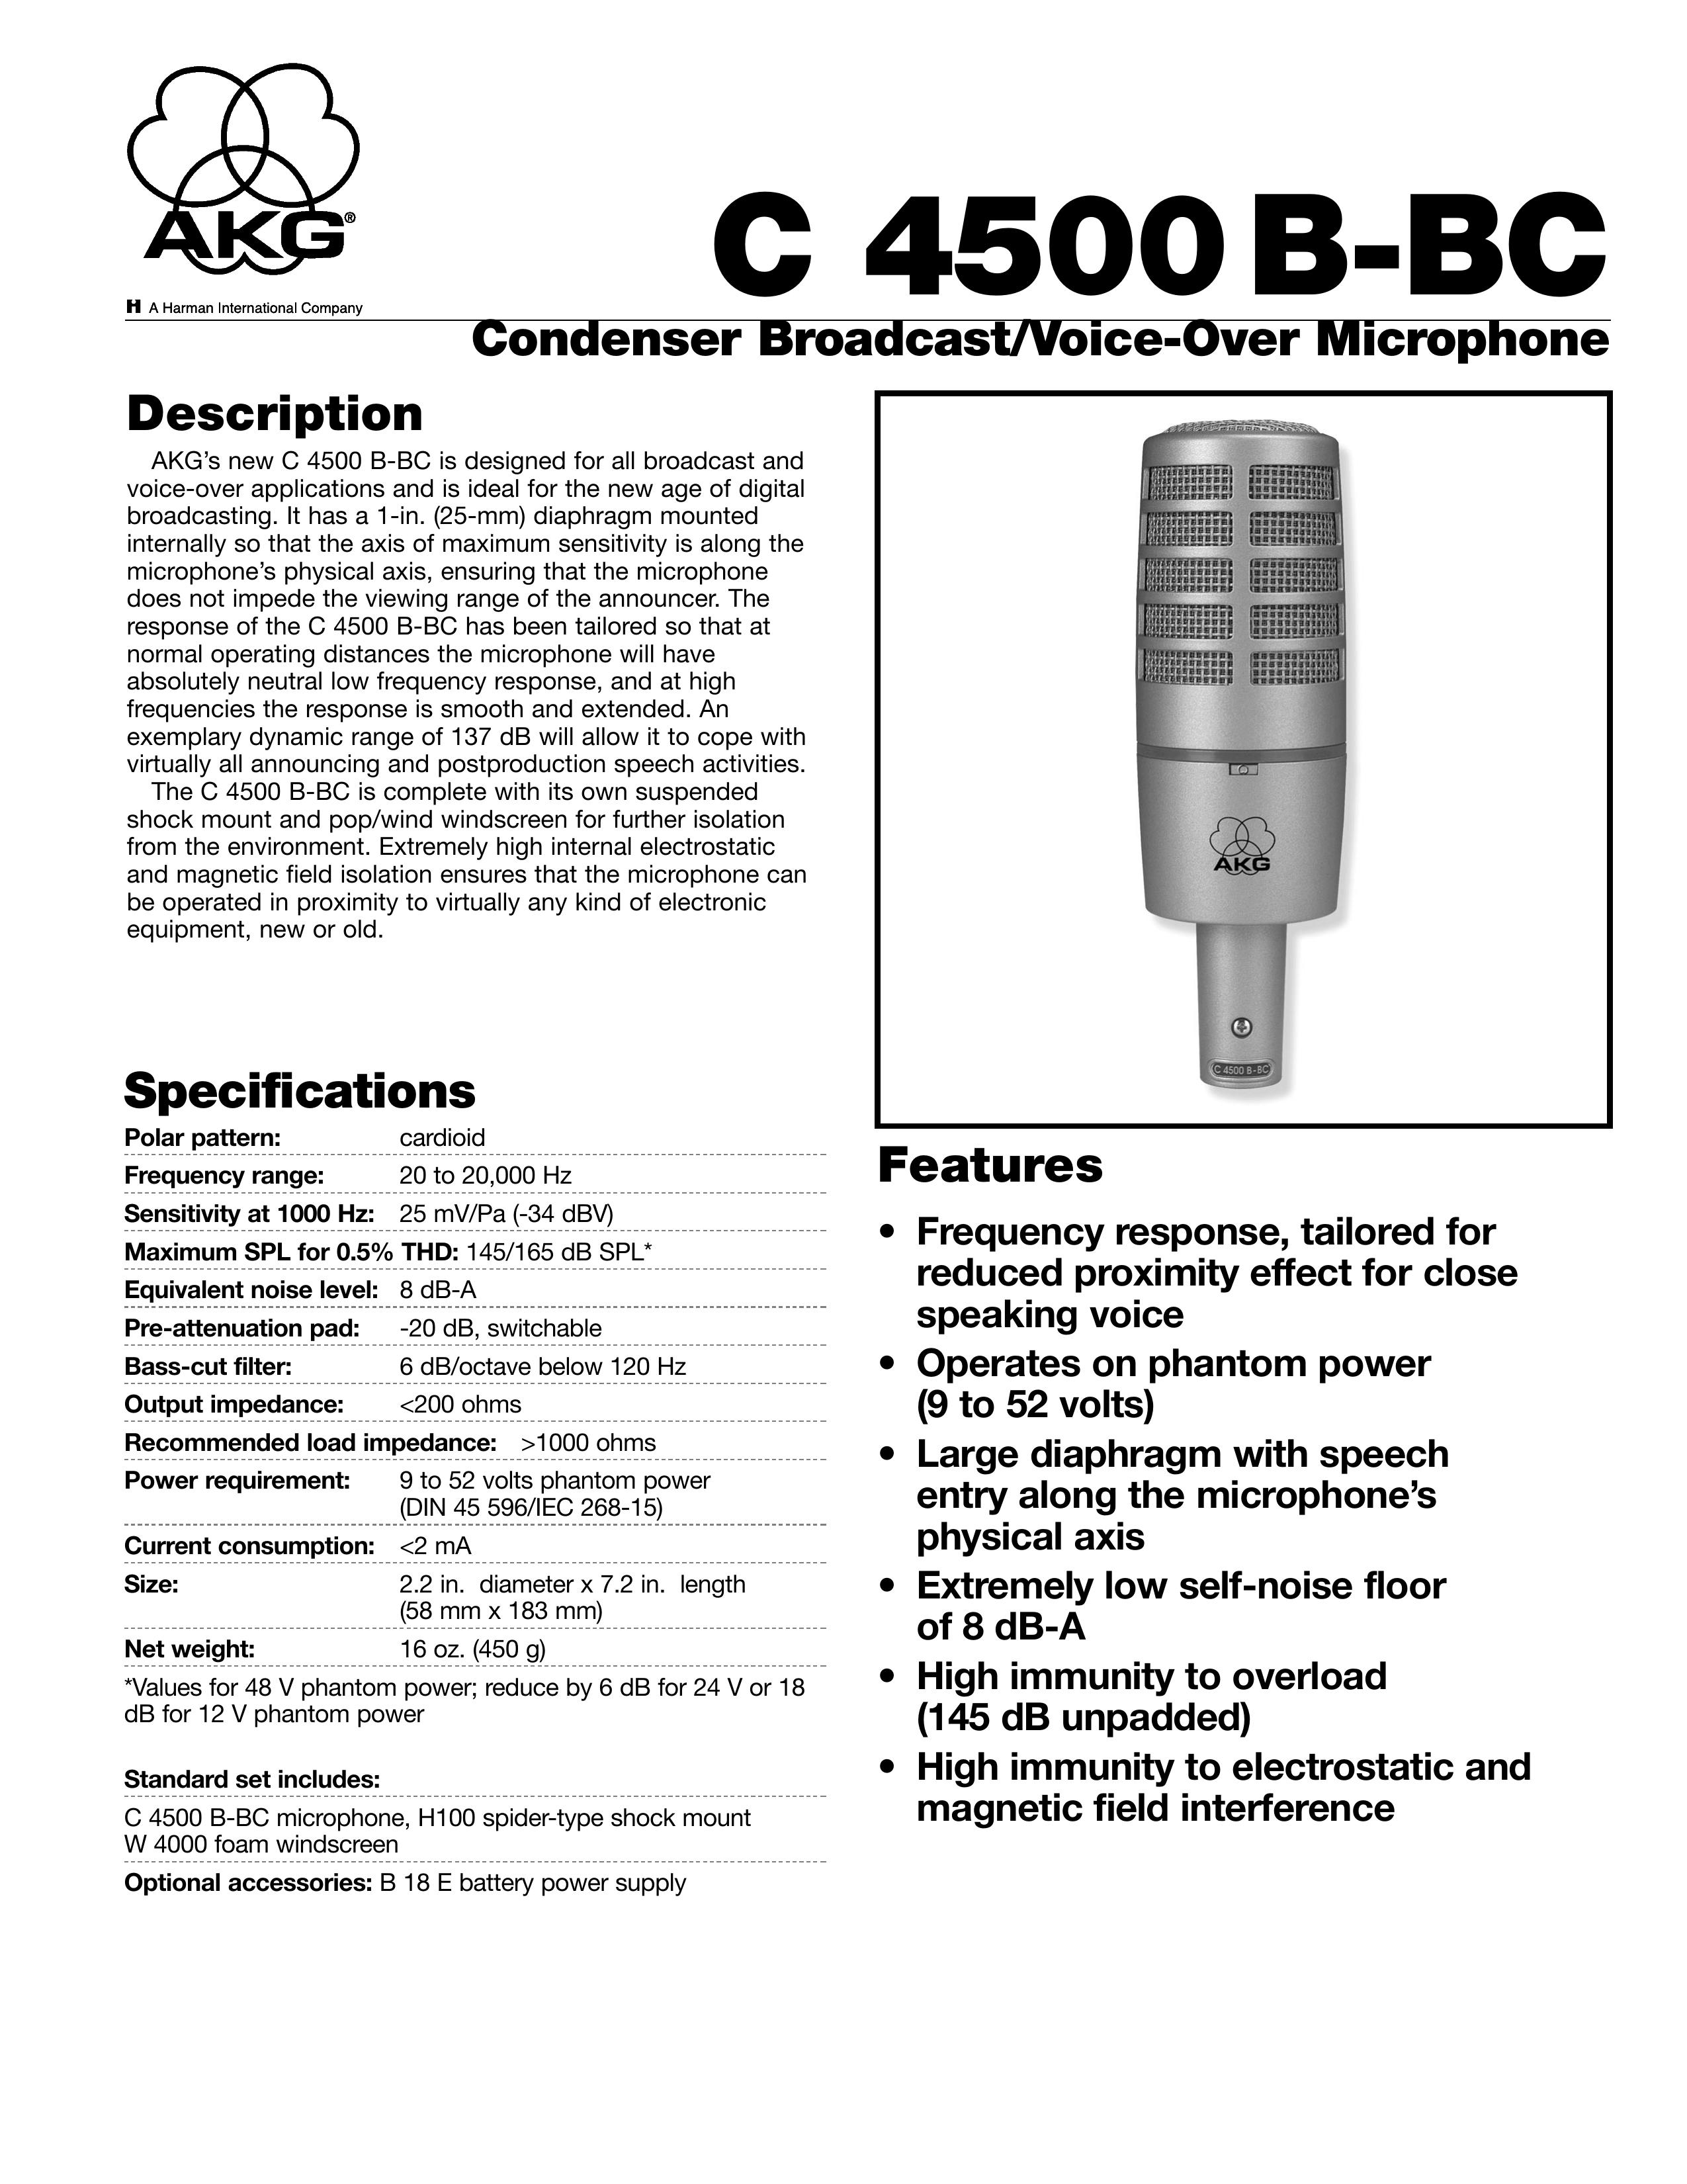 AKG Acoustics C 4500B-BC Microphone User Manual